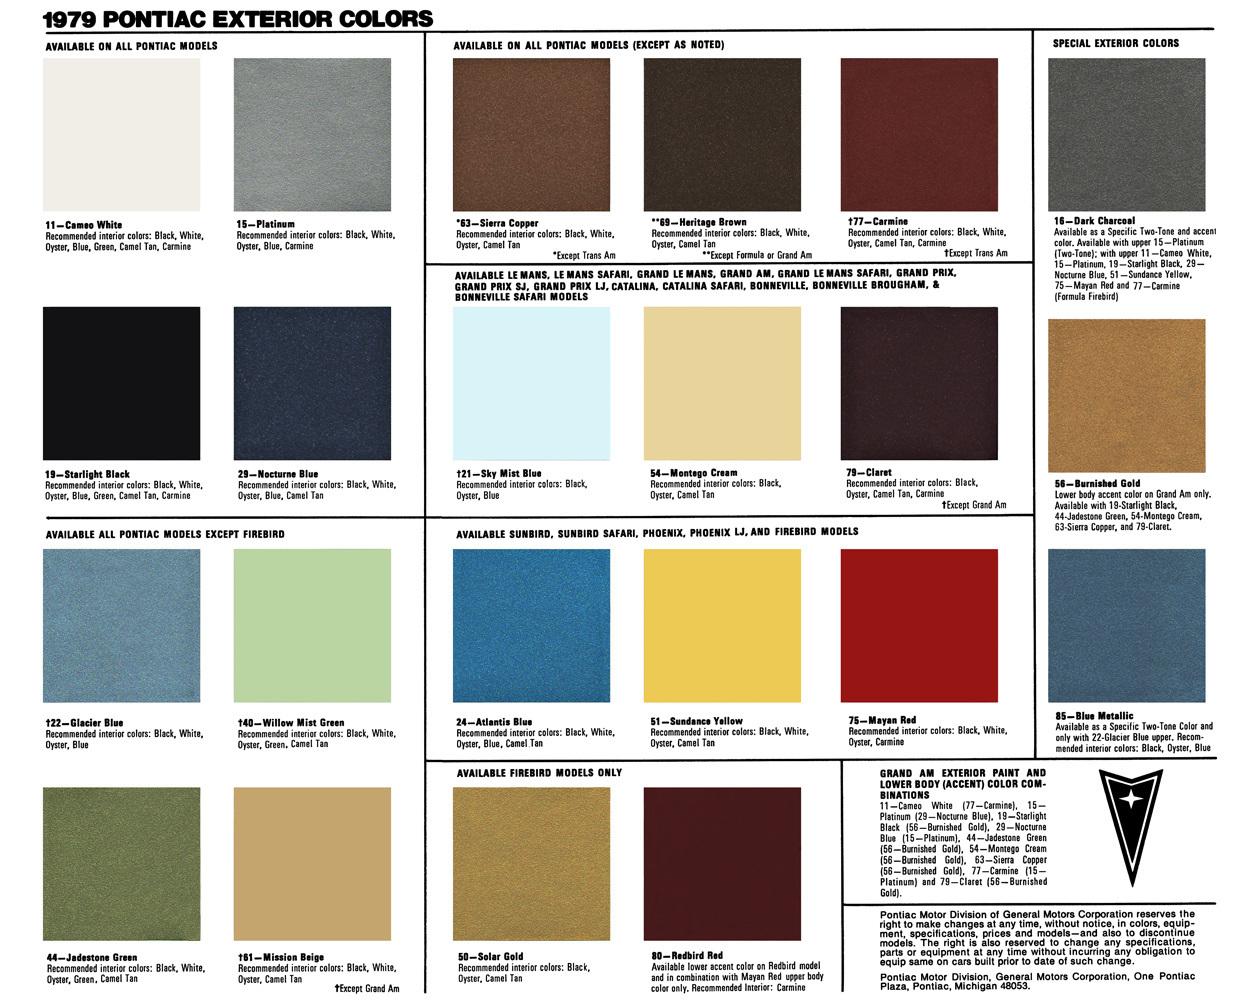 1979 Pontiac Colors & Interiors-27-29